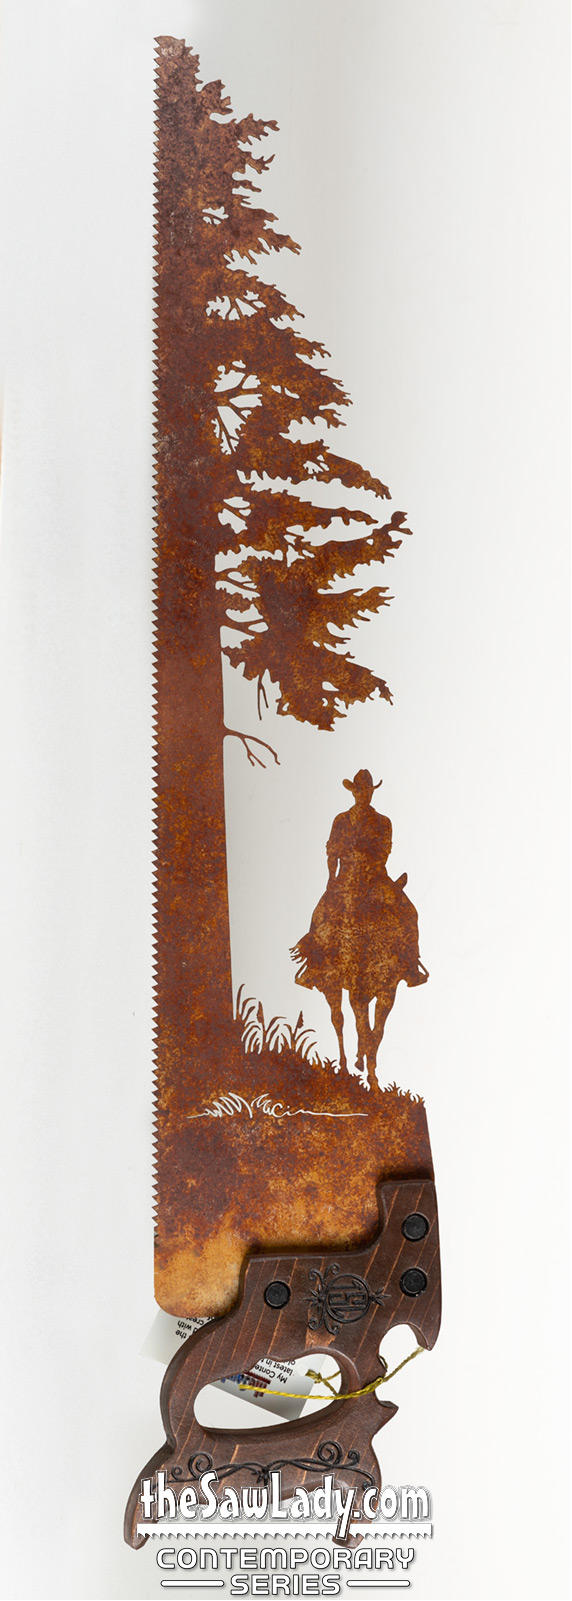 Cowboy-Riding-his-Horse- metal art saw